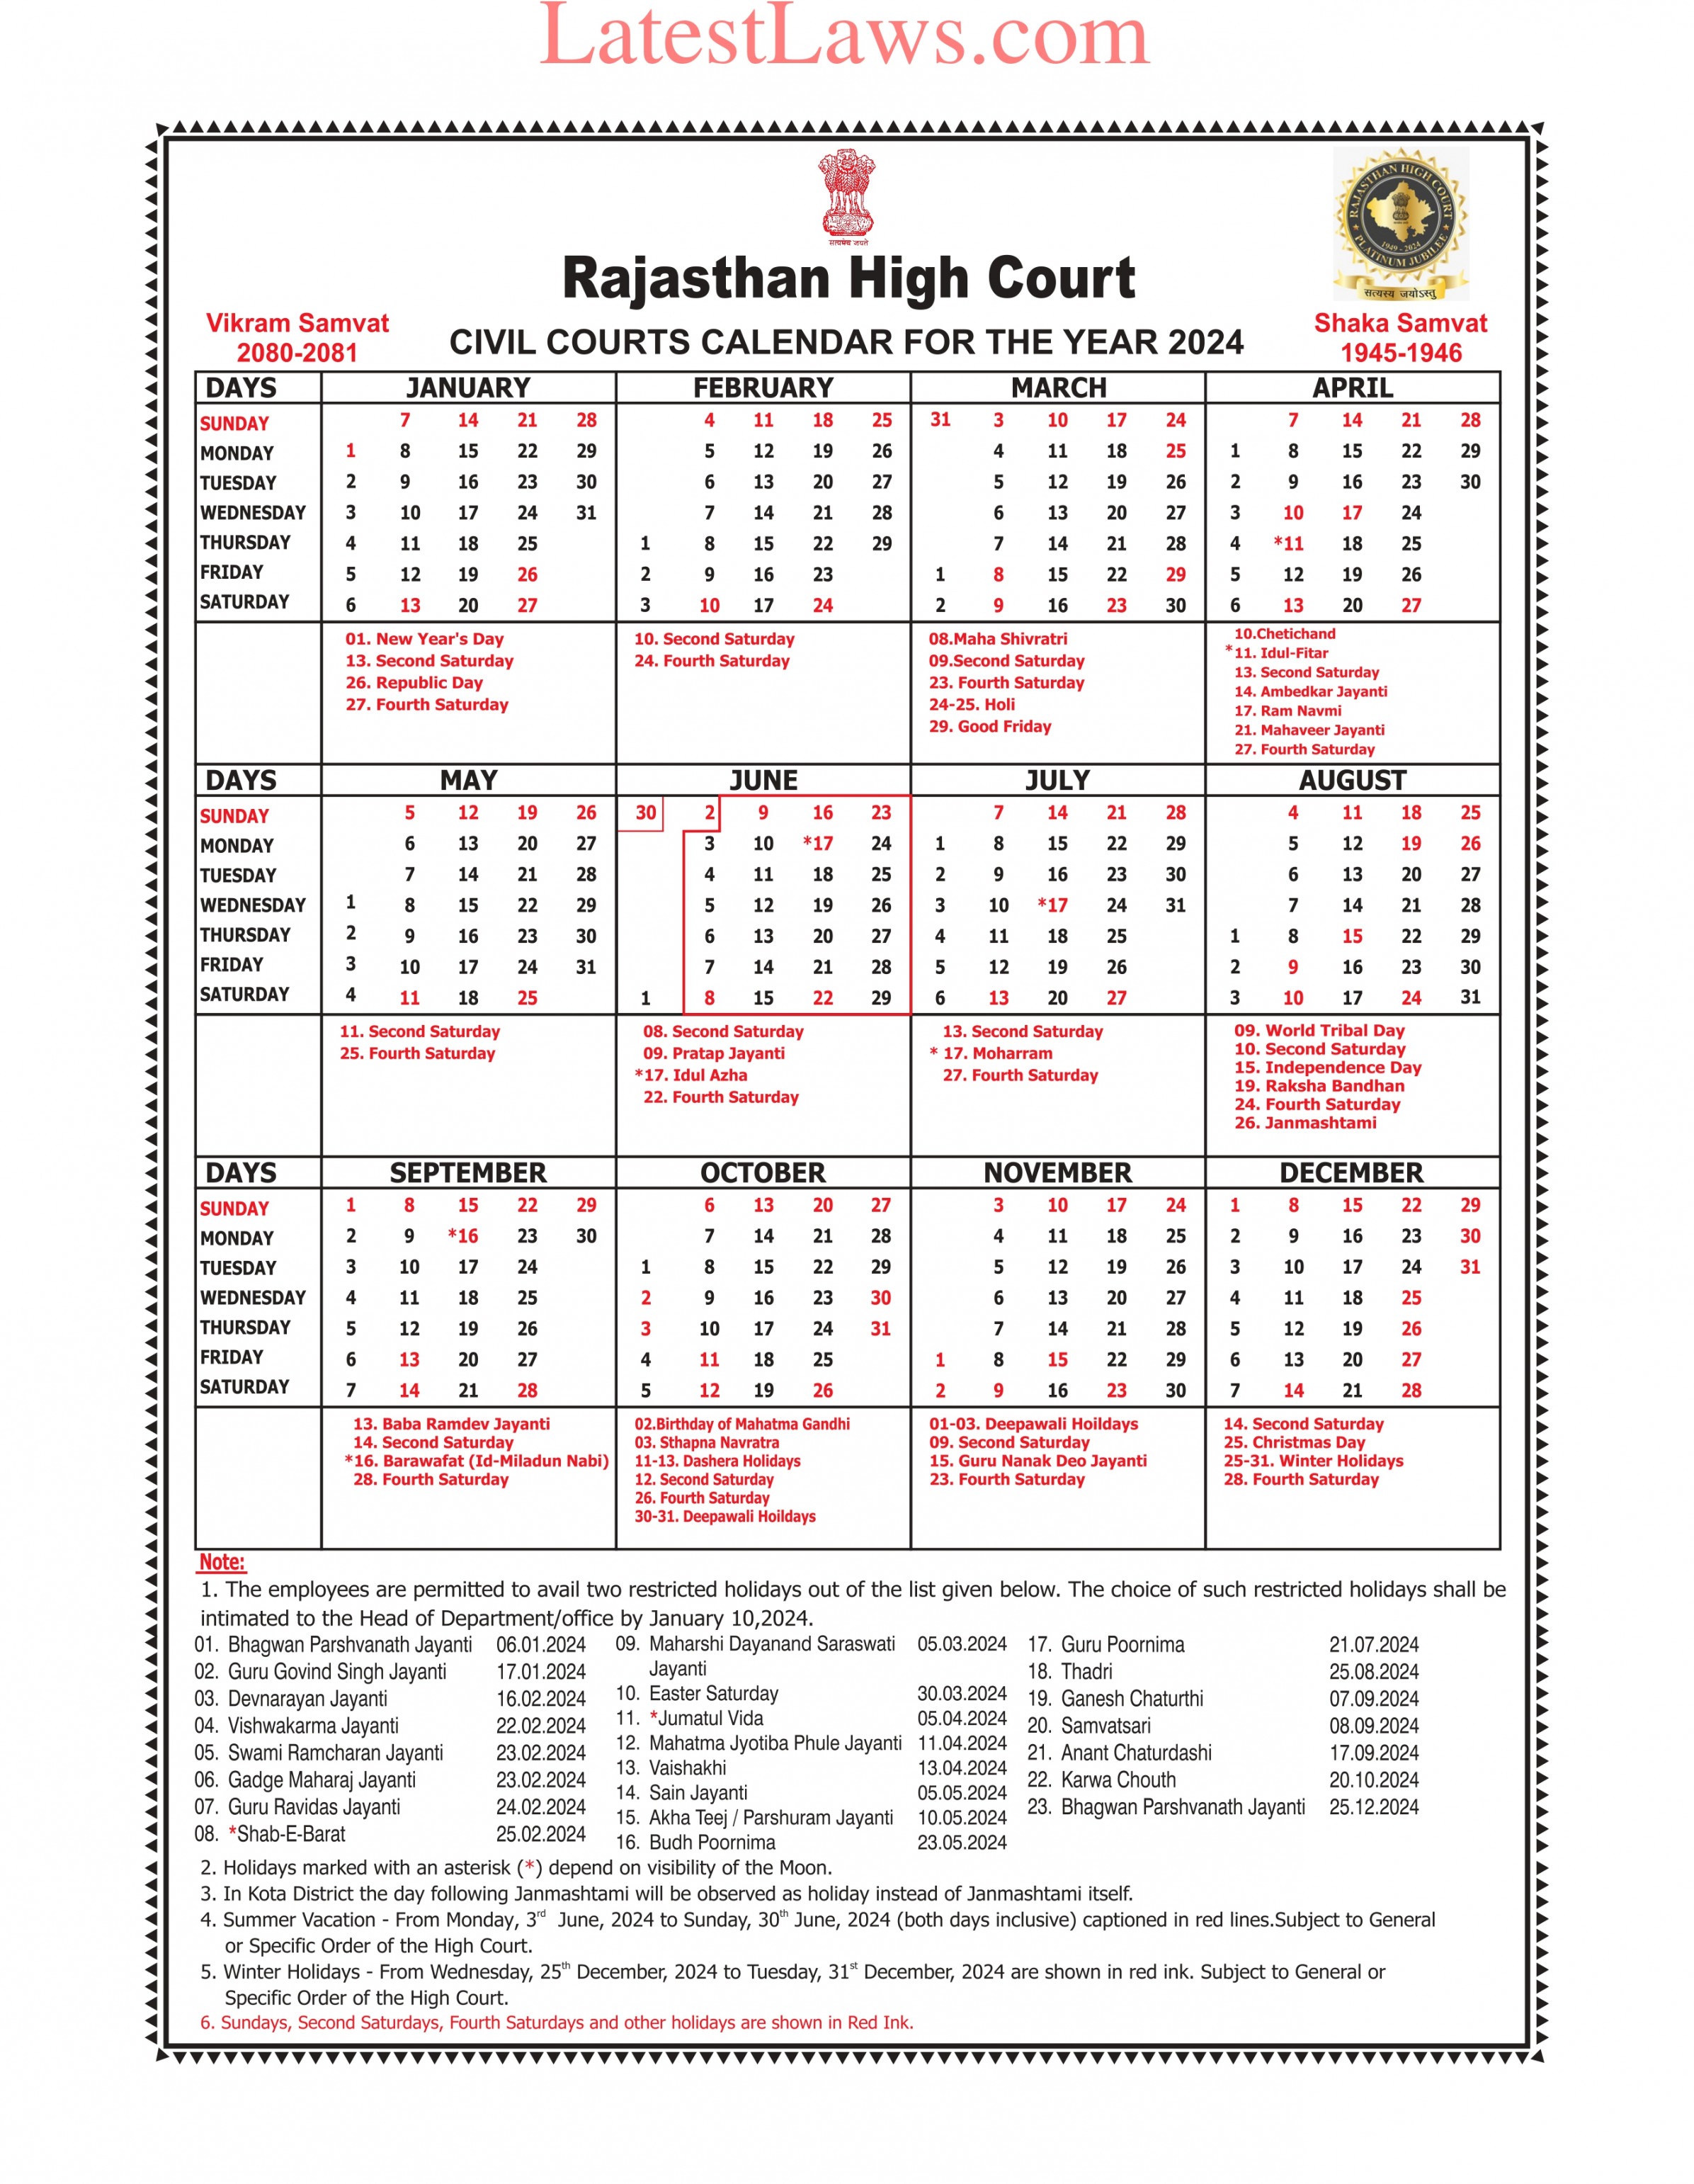 Rajasthan High Court Calendar,